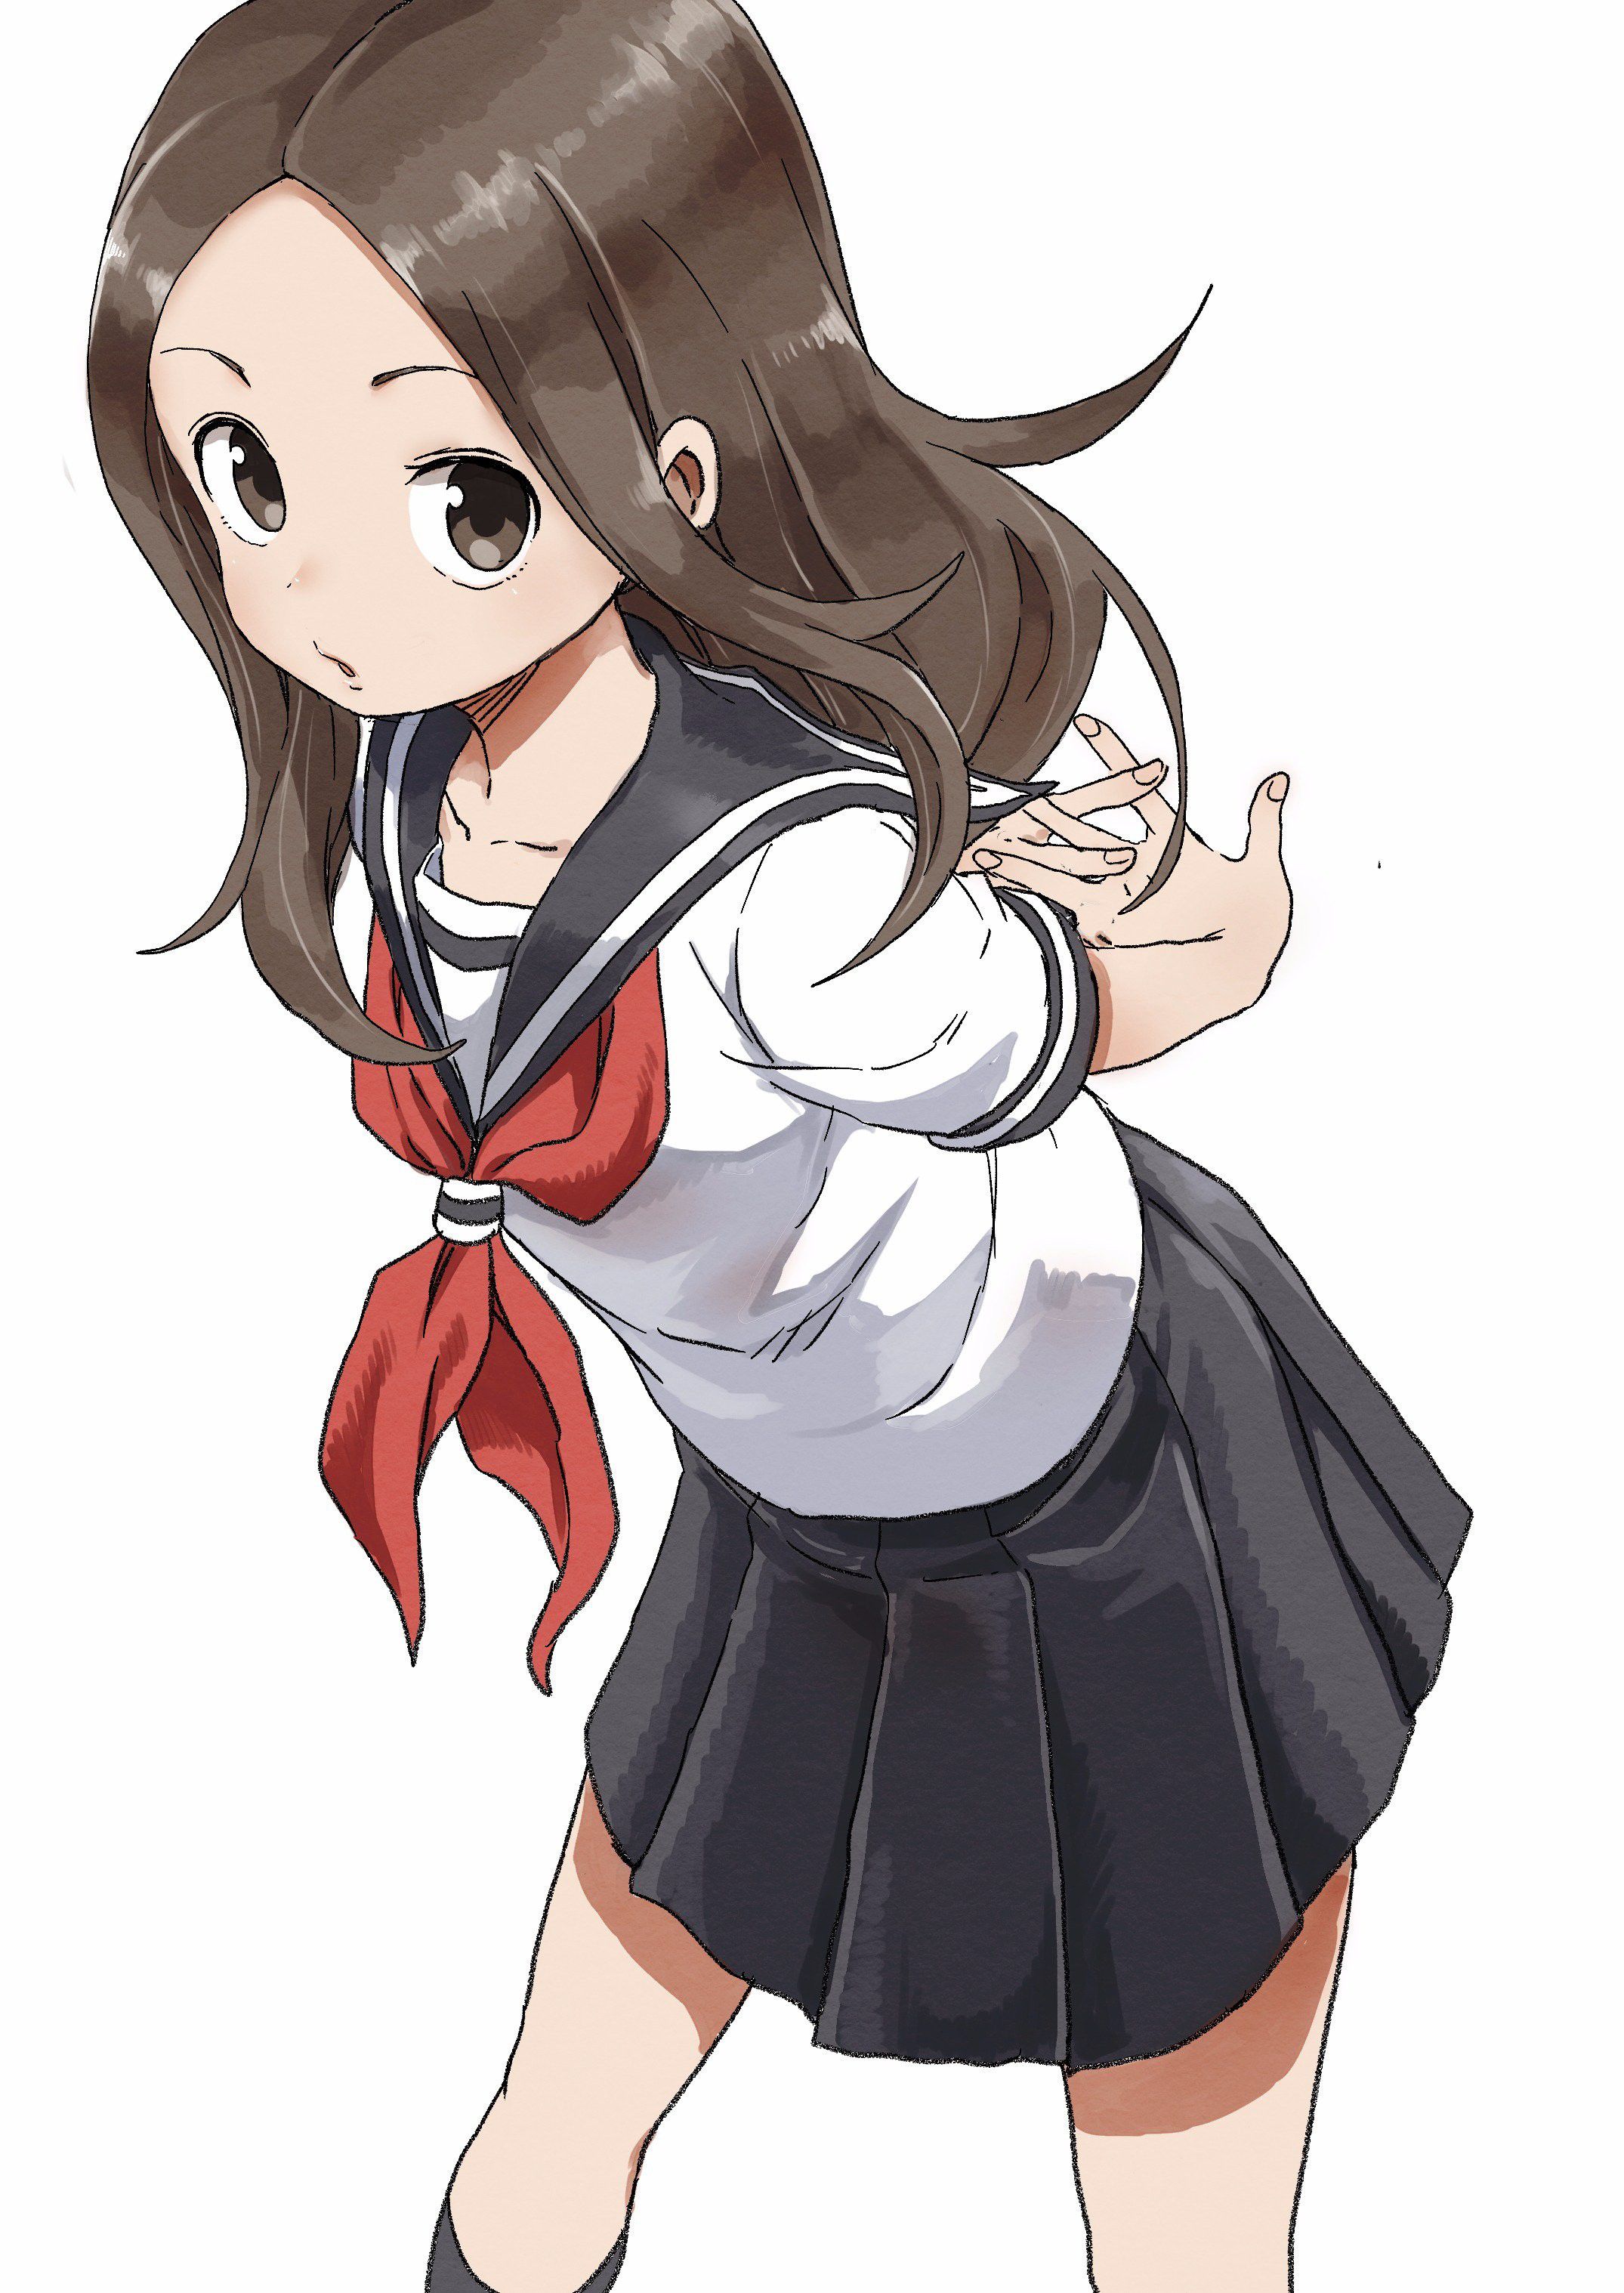 Secondary image of a cute girl in school uniform part 10 [Uniform/non-erotic] 25